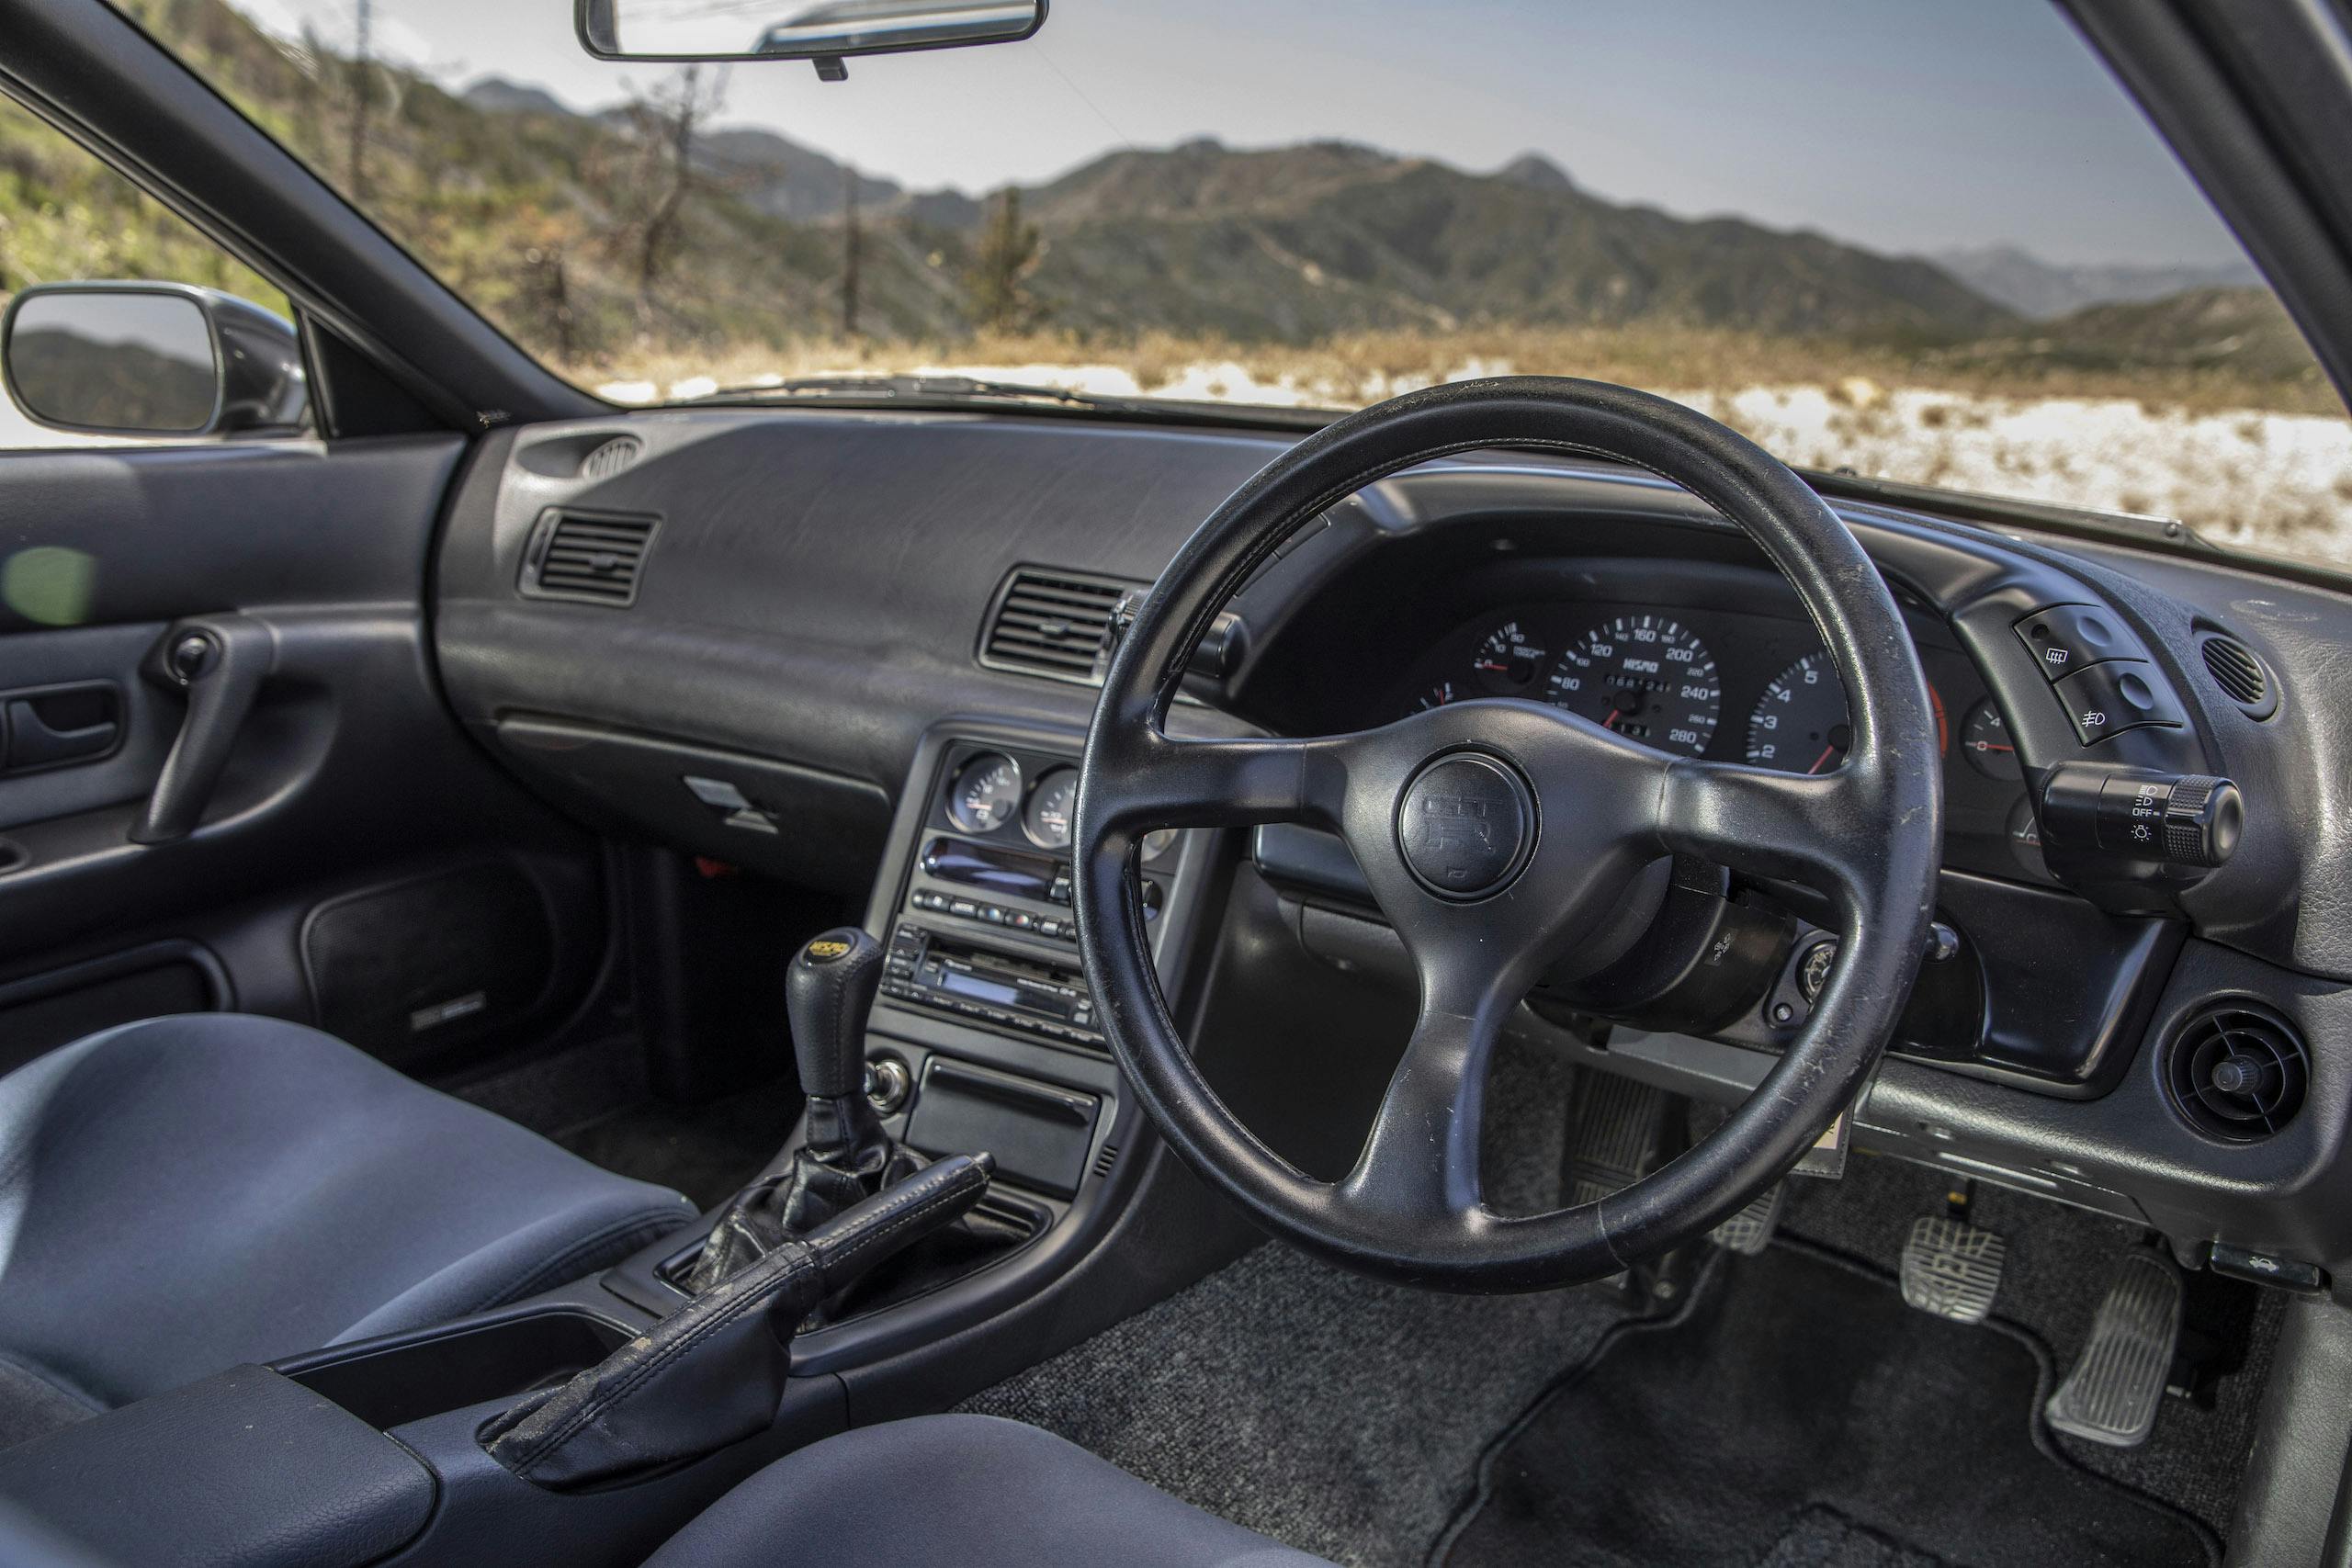 Nissan Skyline R32 GT-R interior front dash full